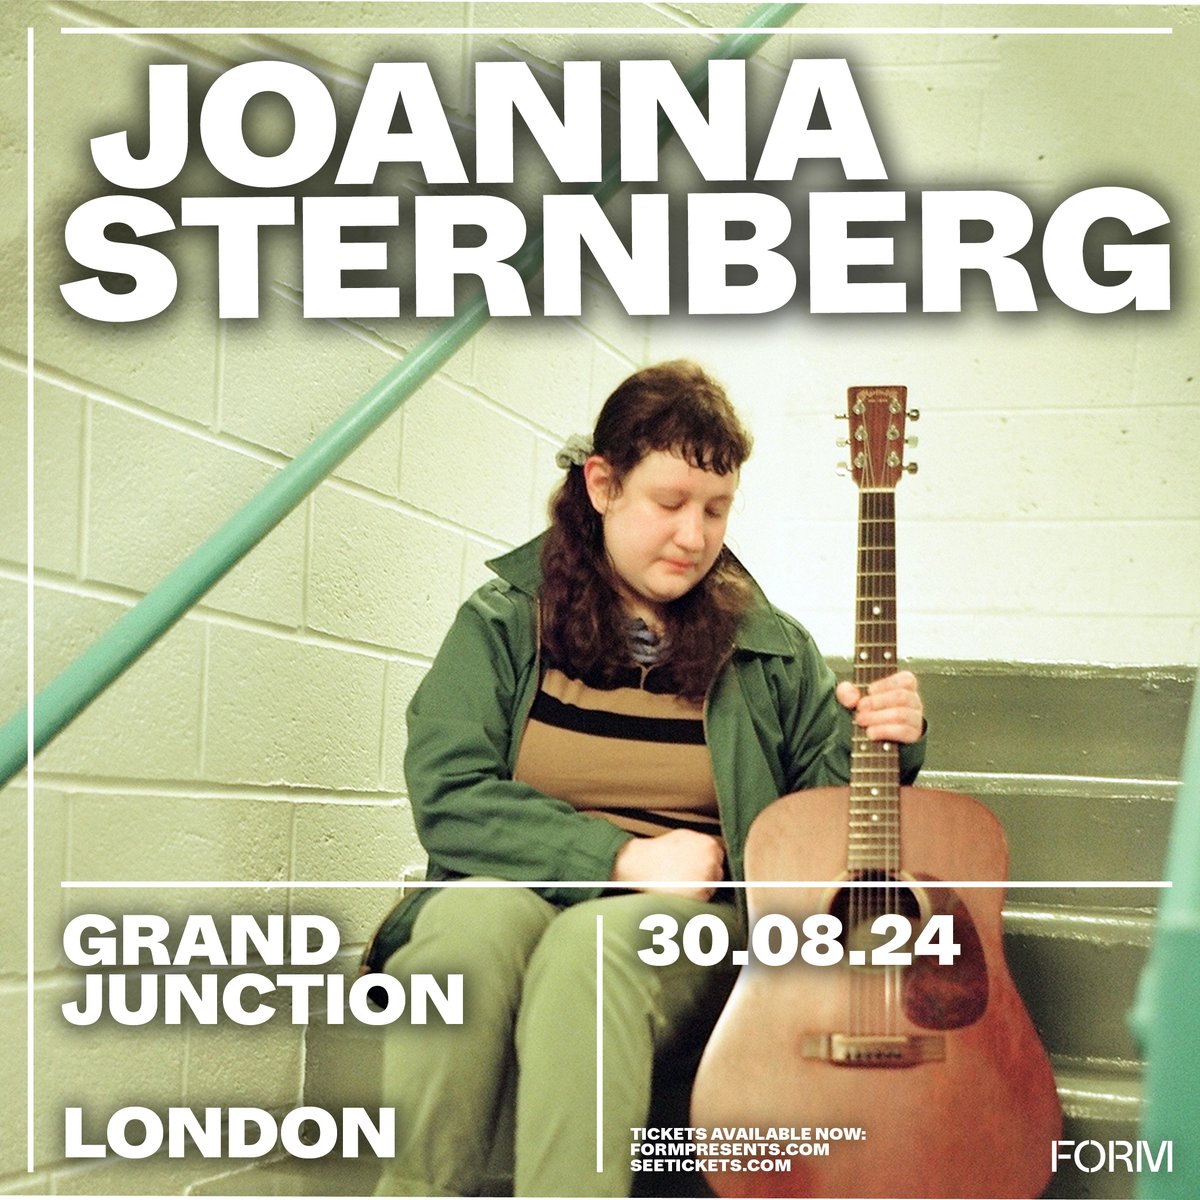 New York City singer, songwriter, musician and visual artist @joannasternberg returns to London on 30th August at @grandjunctionW2! 🎟 Tickets go on sale 10am Monday.